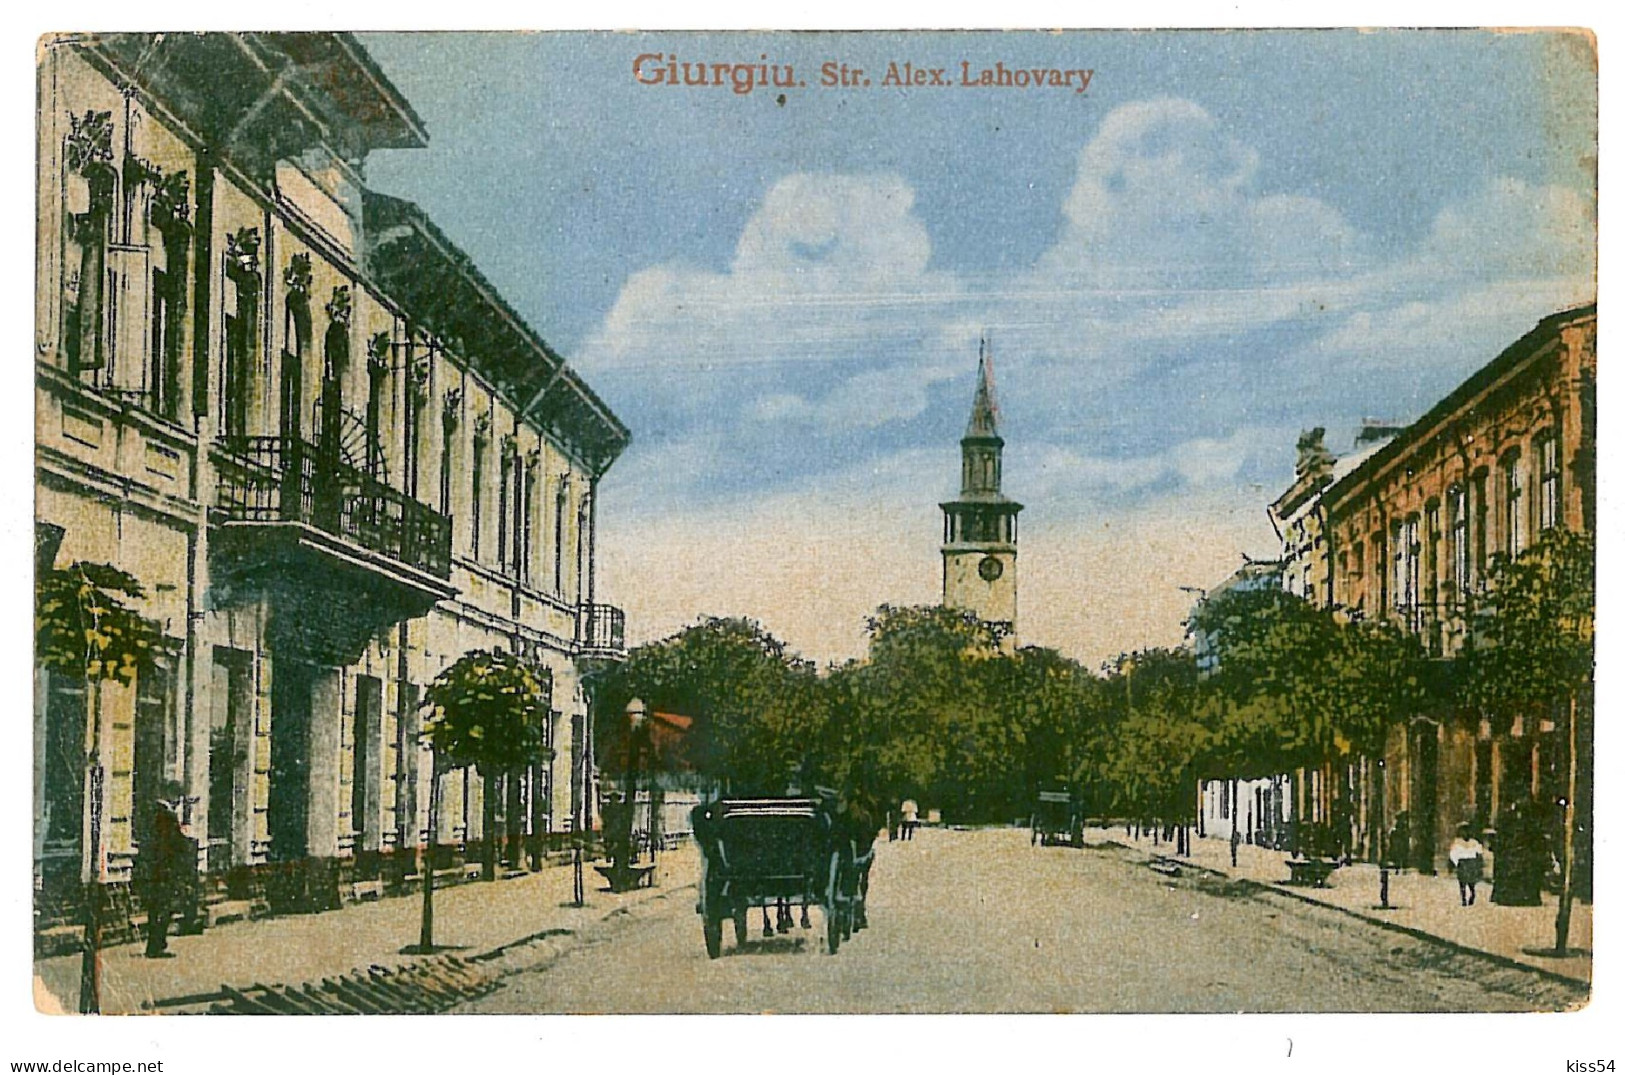 RO 38 - 2582 GIURGIU, Firetower, Street Lahovary, Romania - Old Postcard - Used - 1913 - Romania